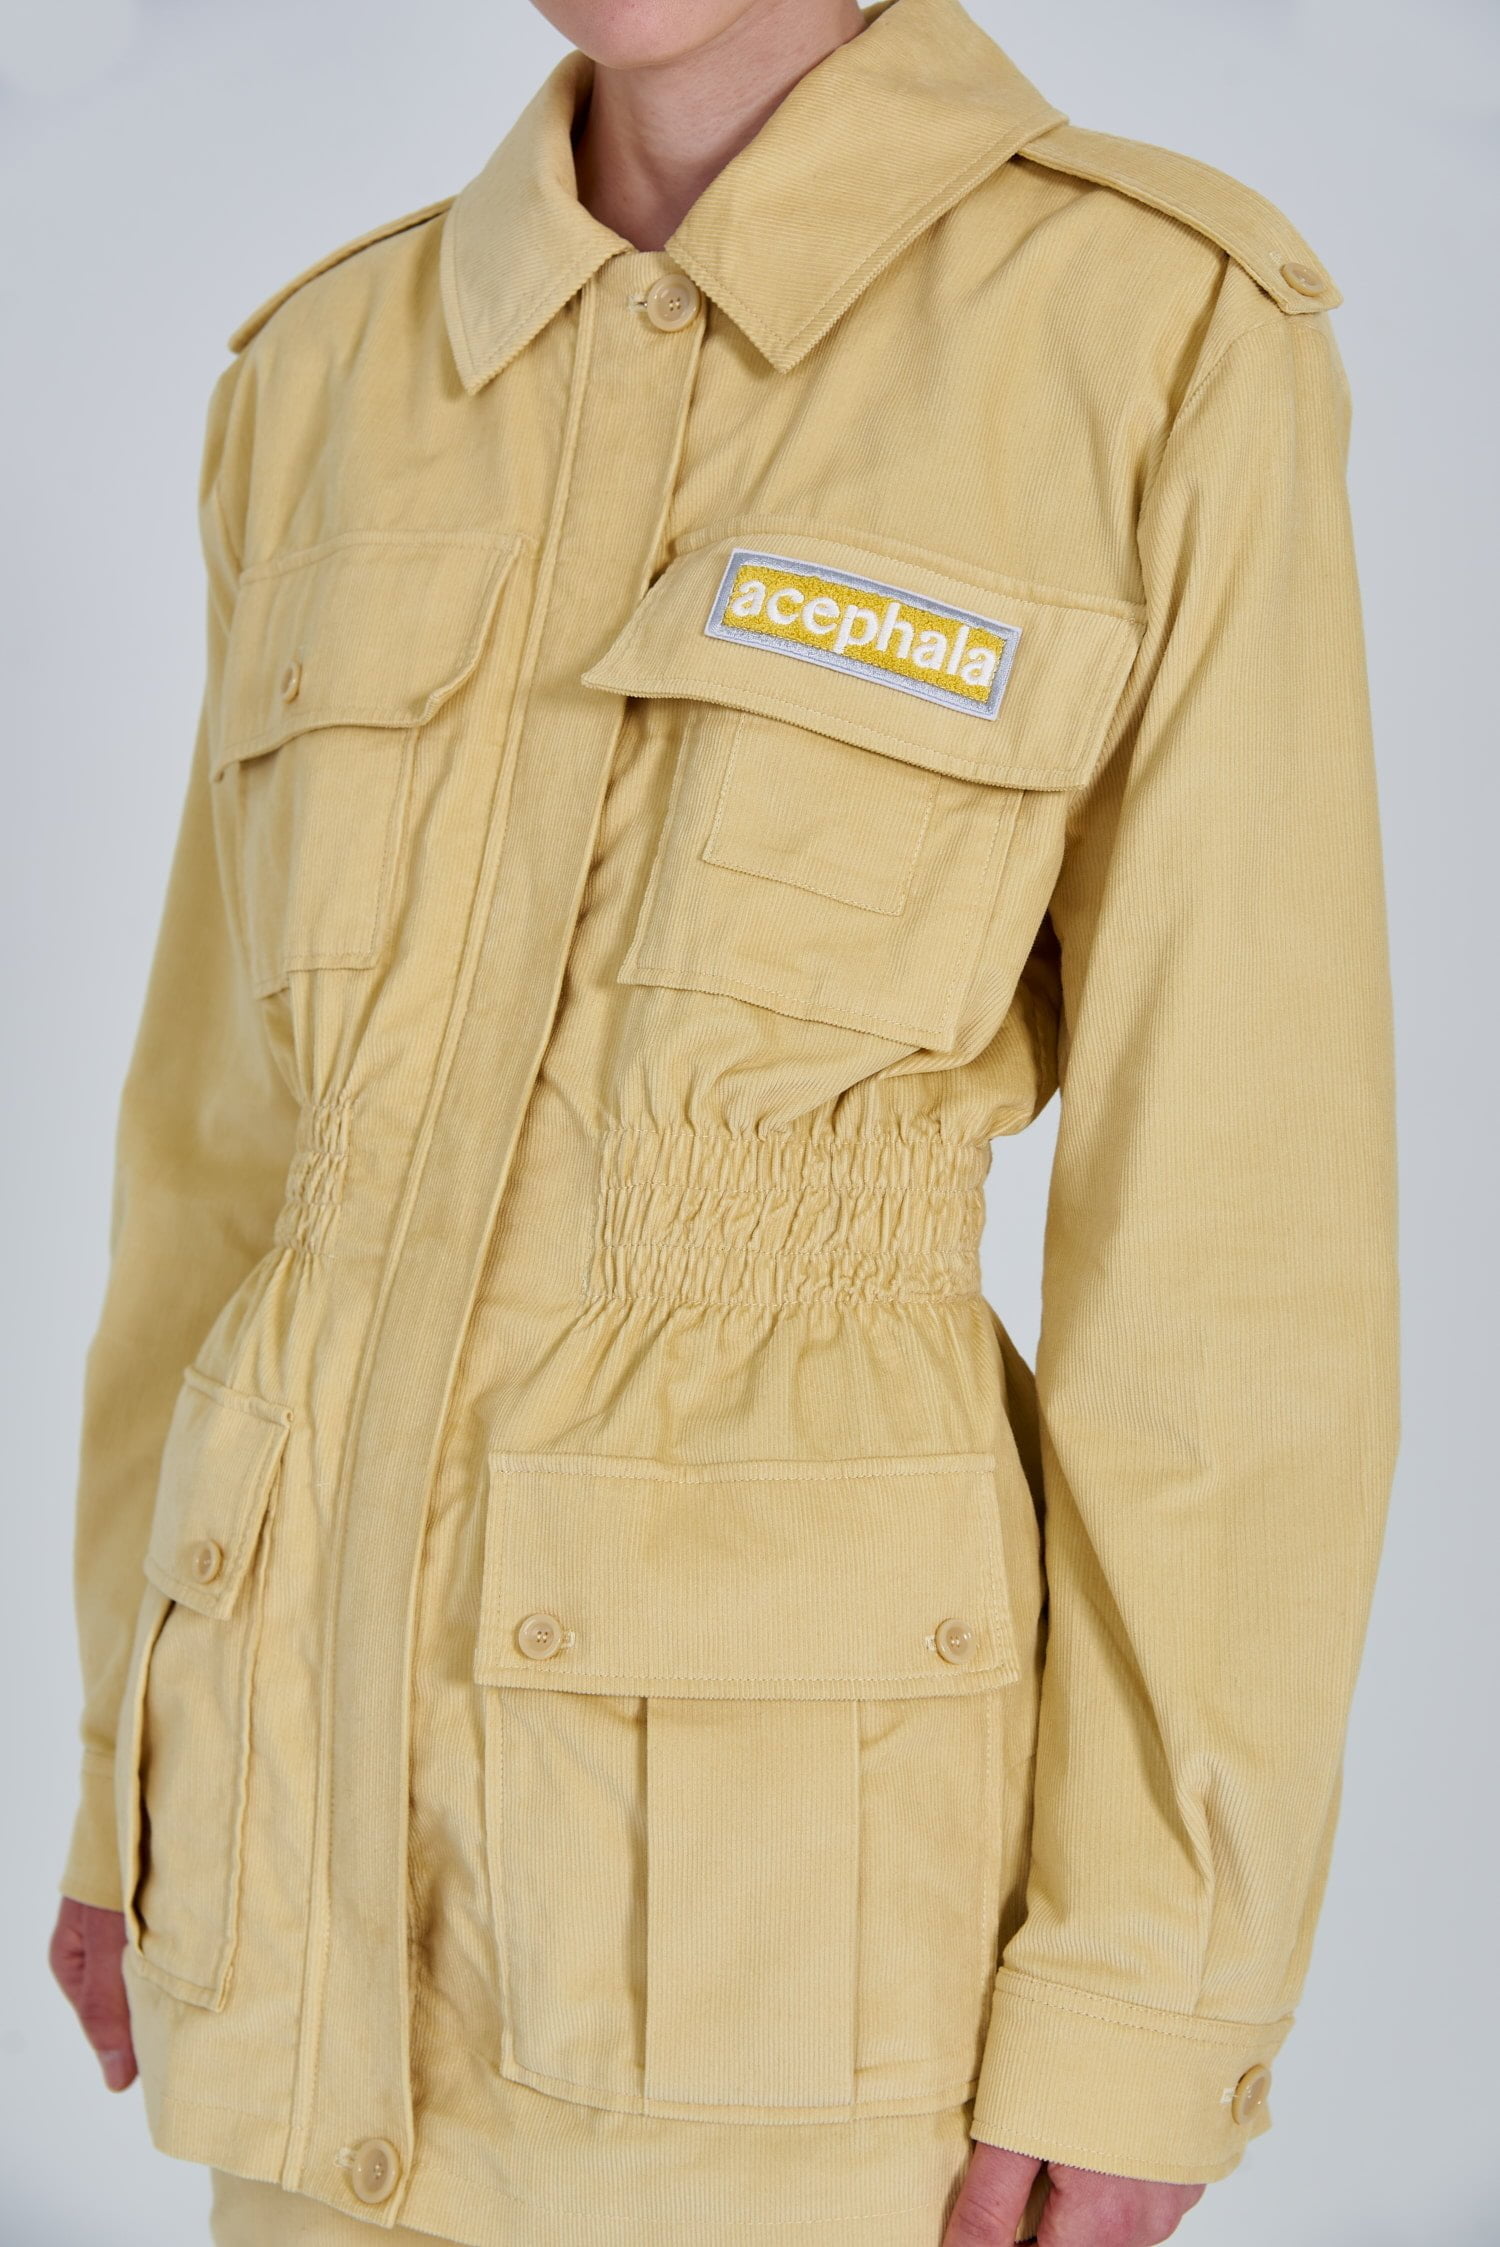 Acephala Fw 2020 21 Yellow Corduroy Trousers Jacket Female Detail